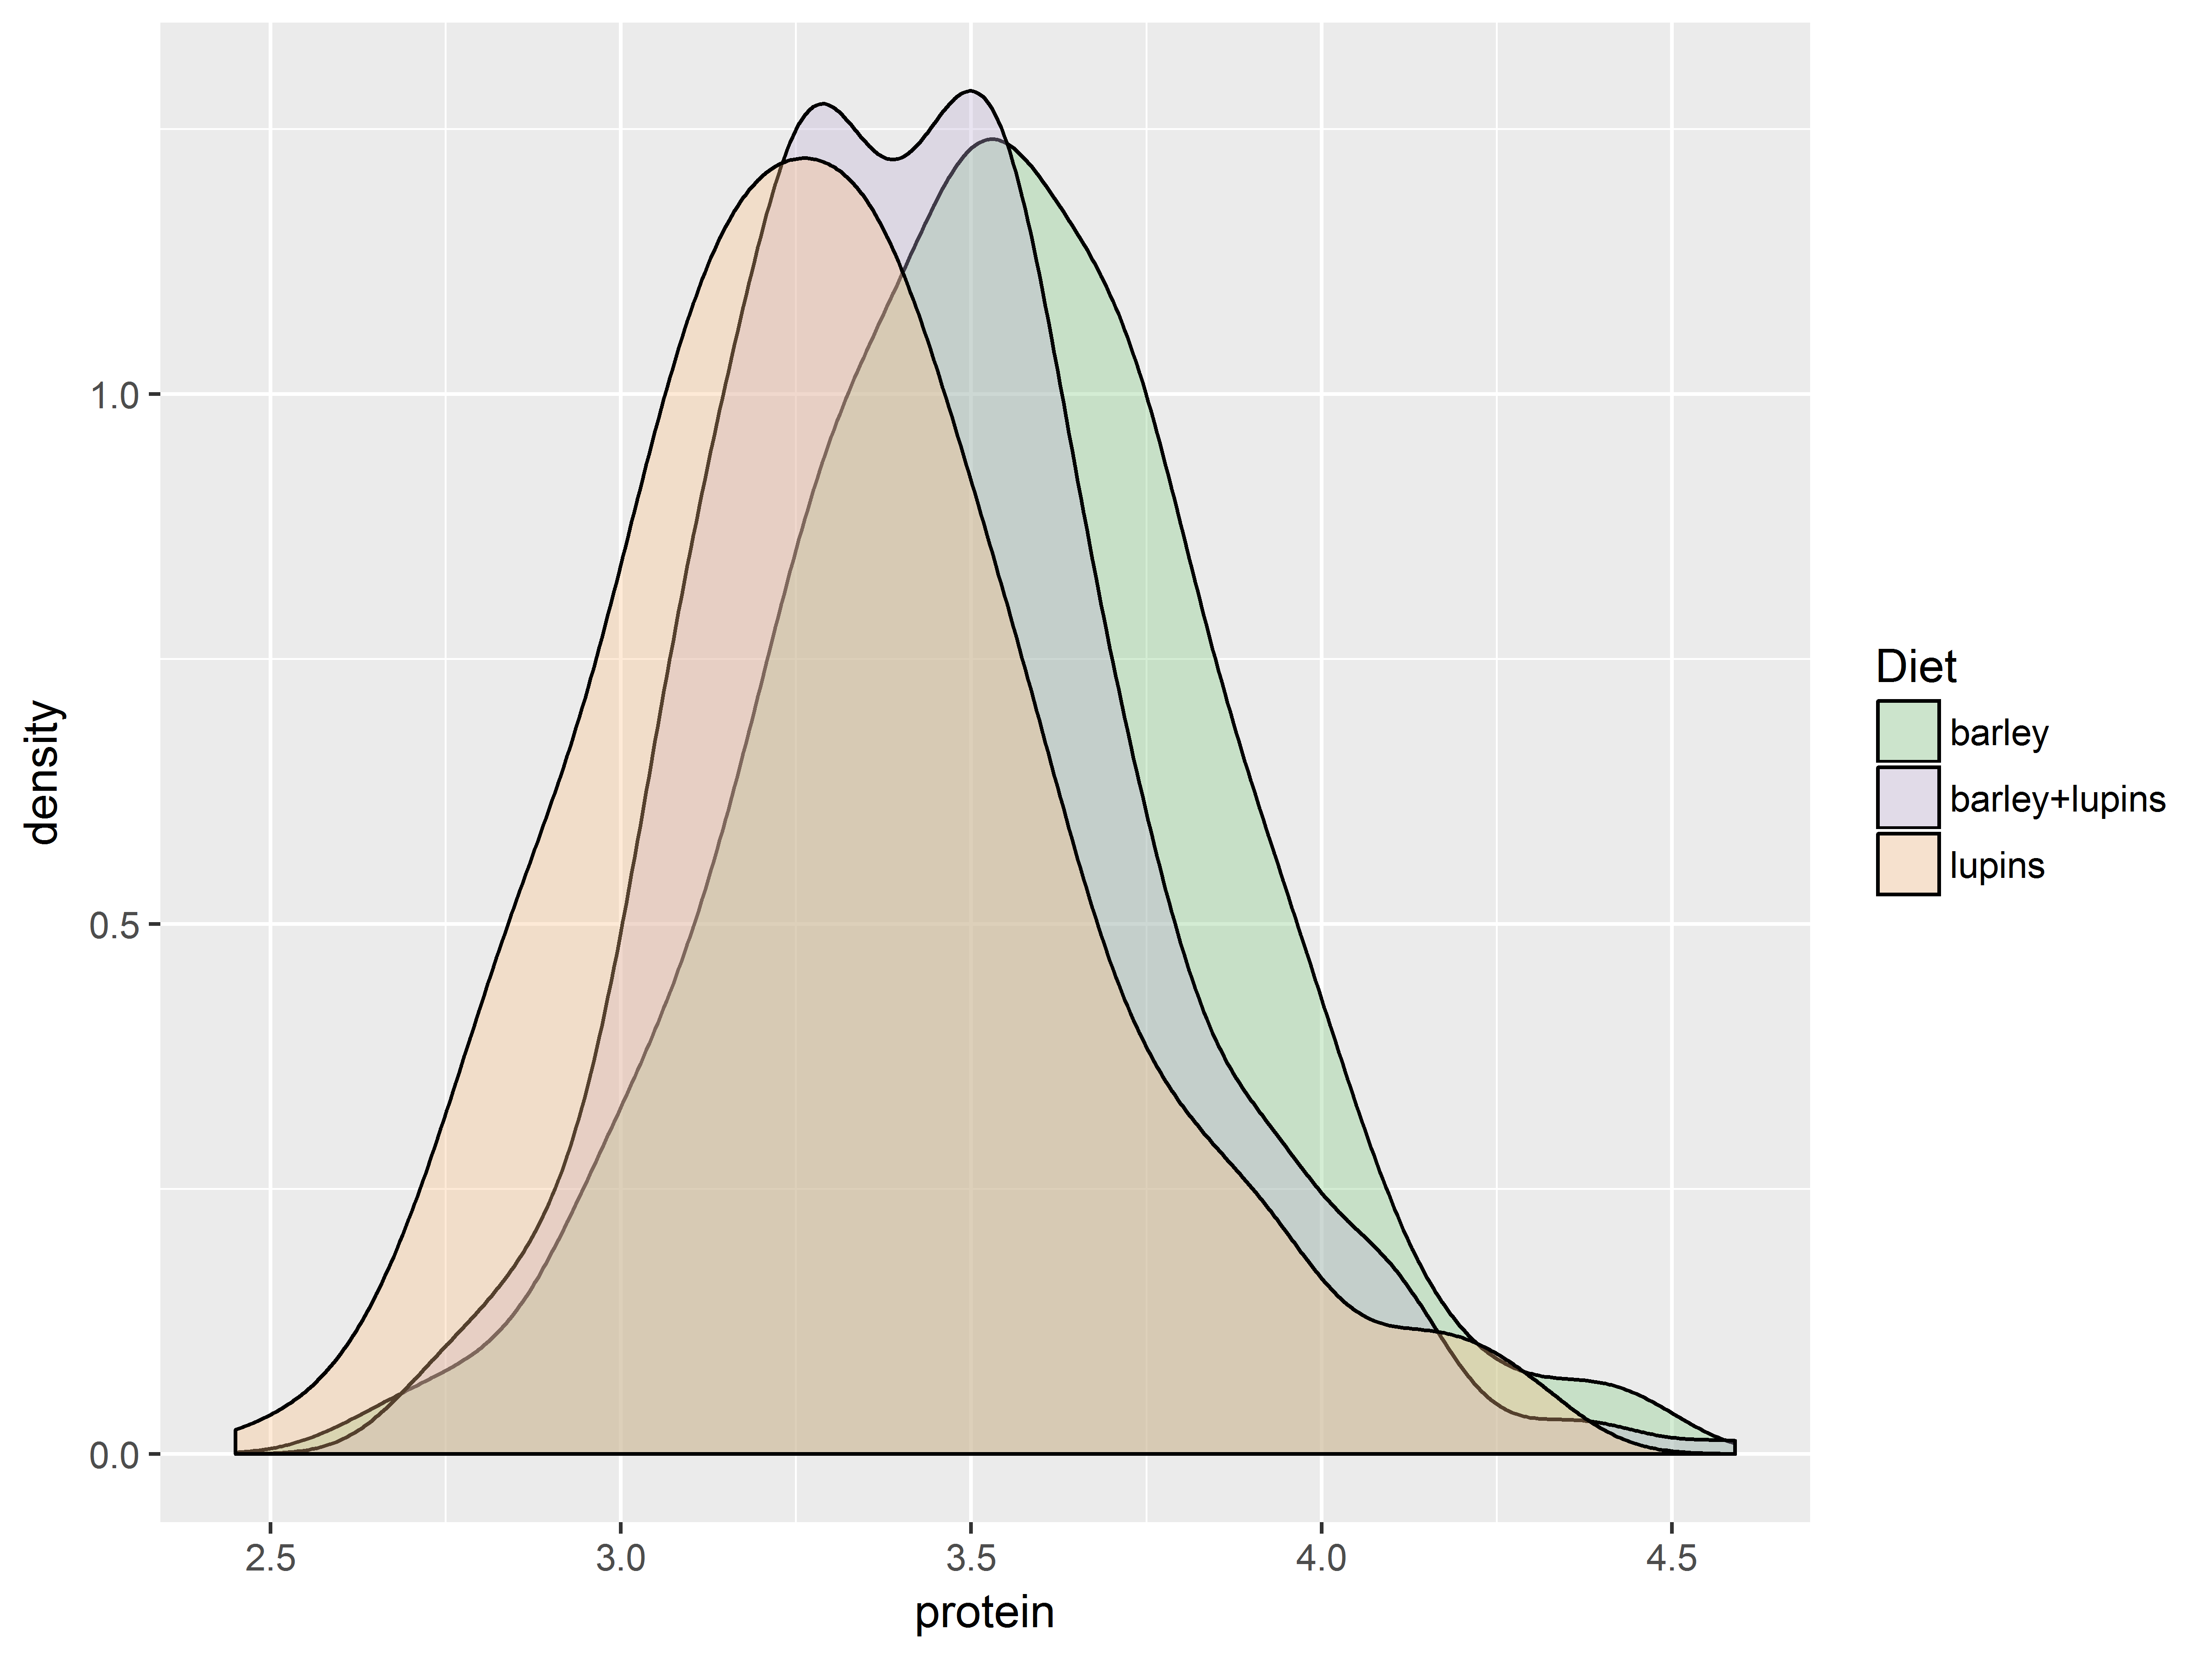 Fig 19c qualititative ColorBrewer scale